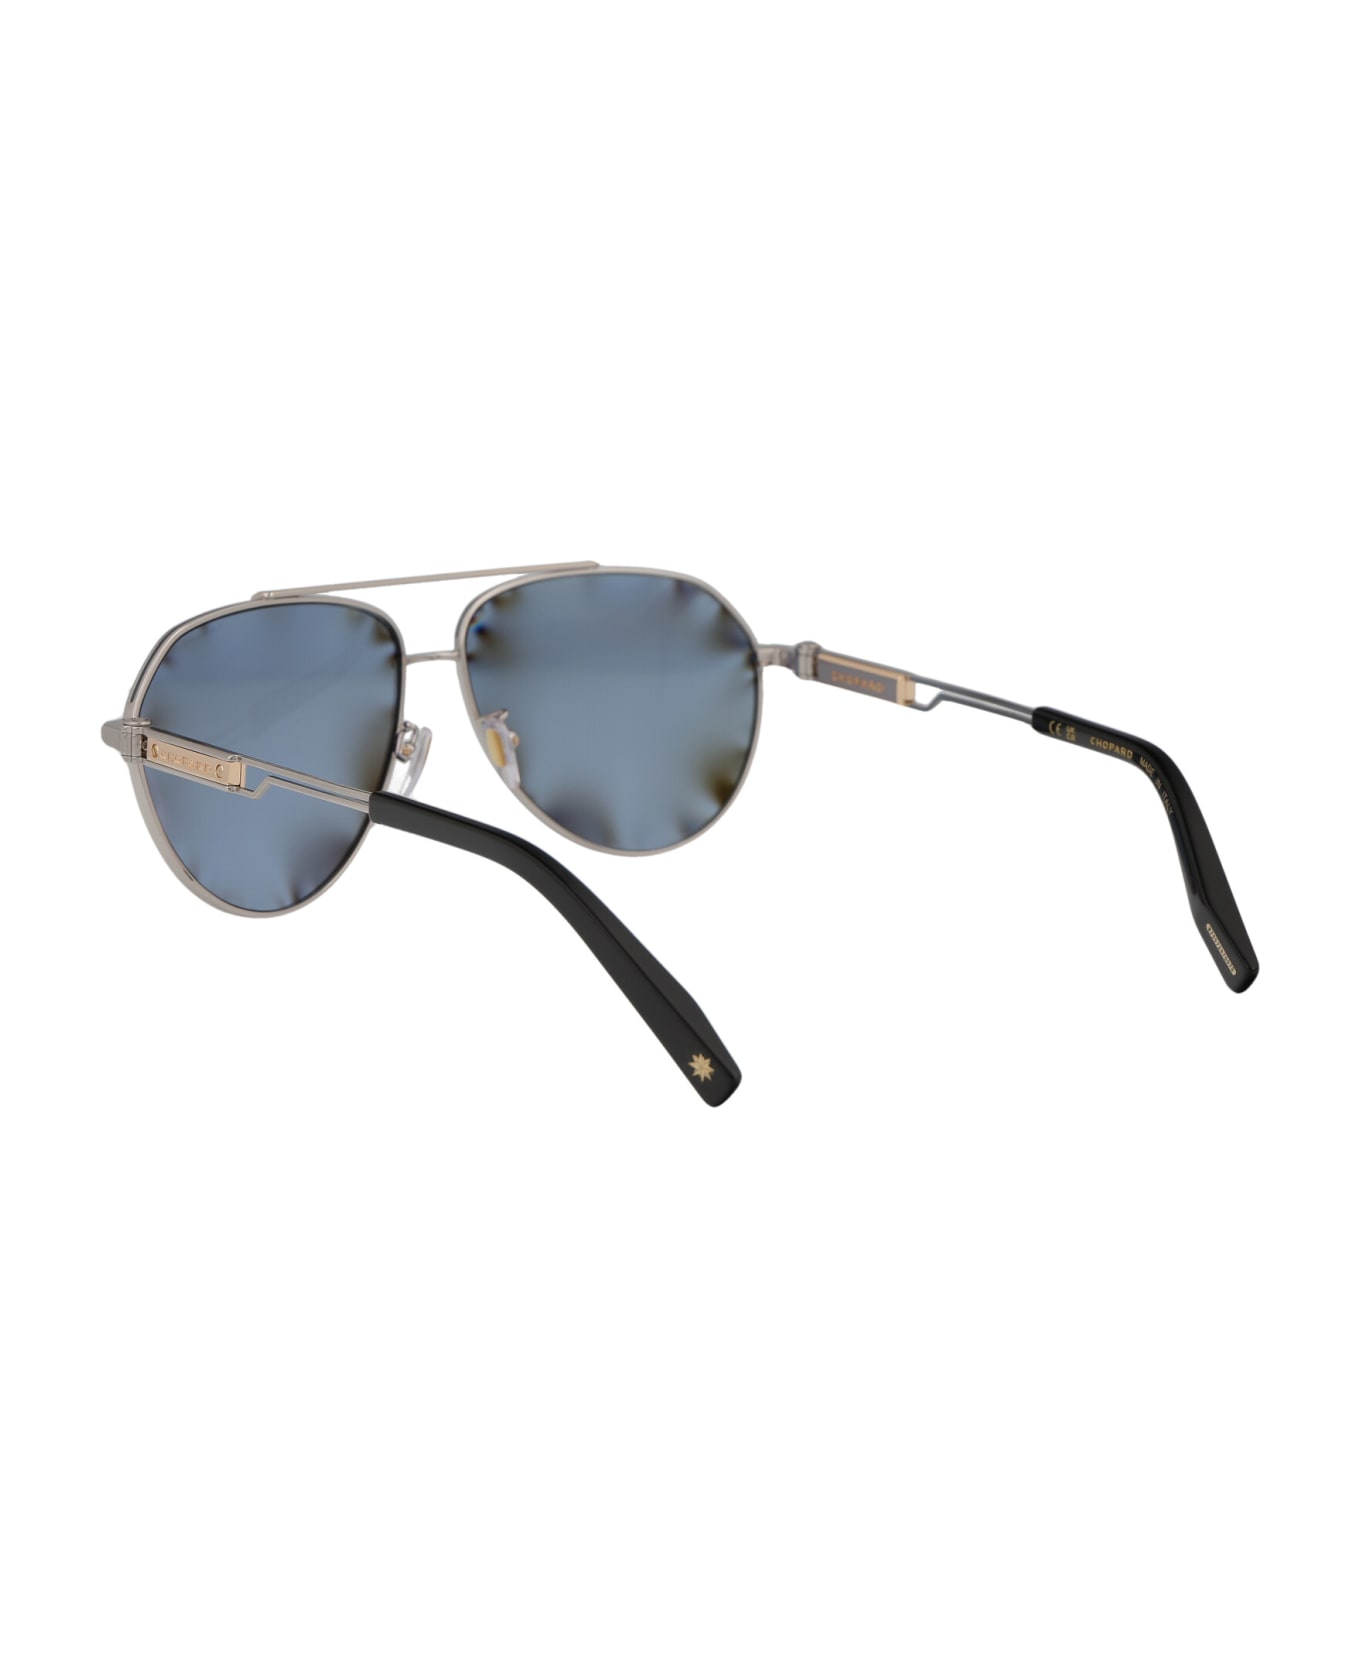 Chopard Schg63 Sunglasses - 340P GOLD C/PARTI PALLADIO LUCIDO サングラス